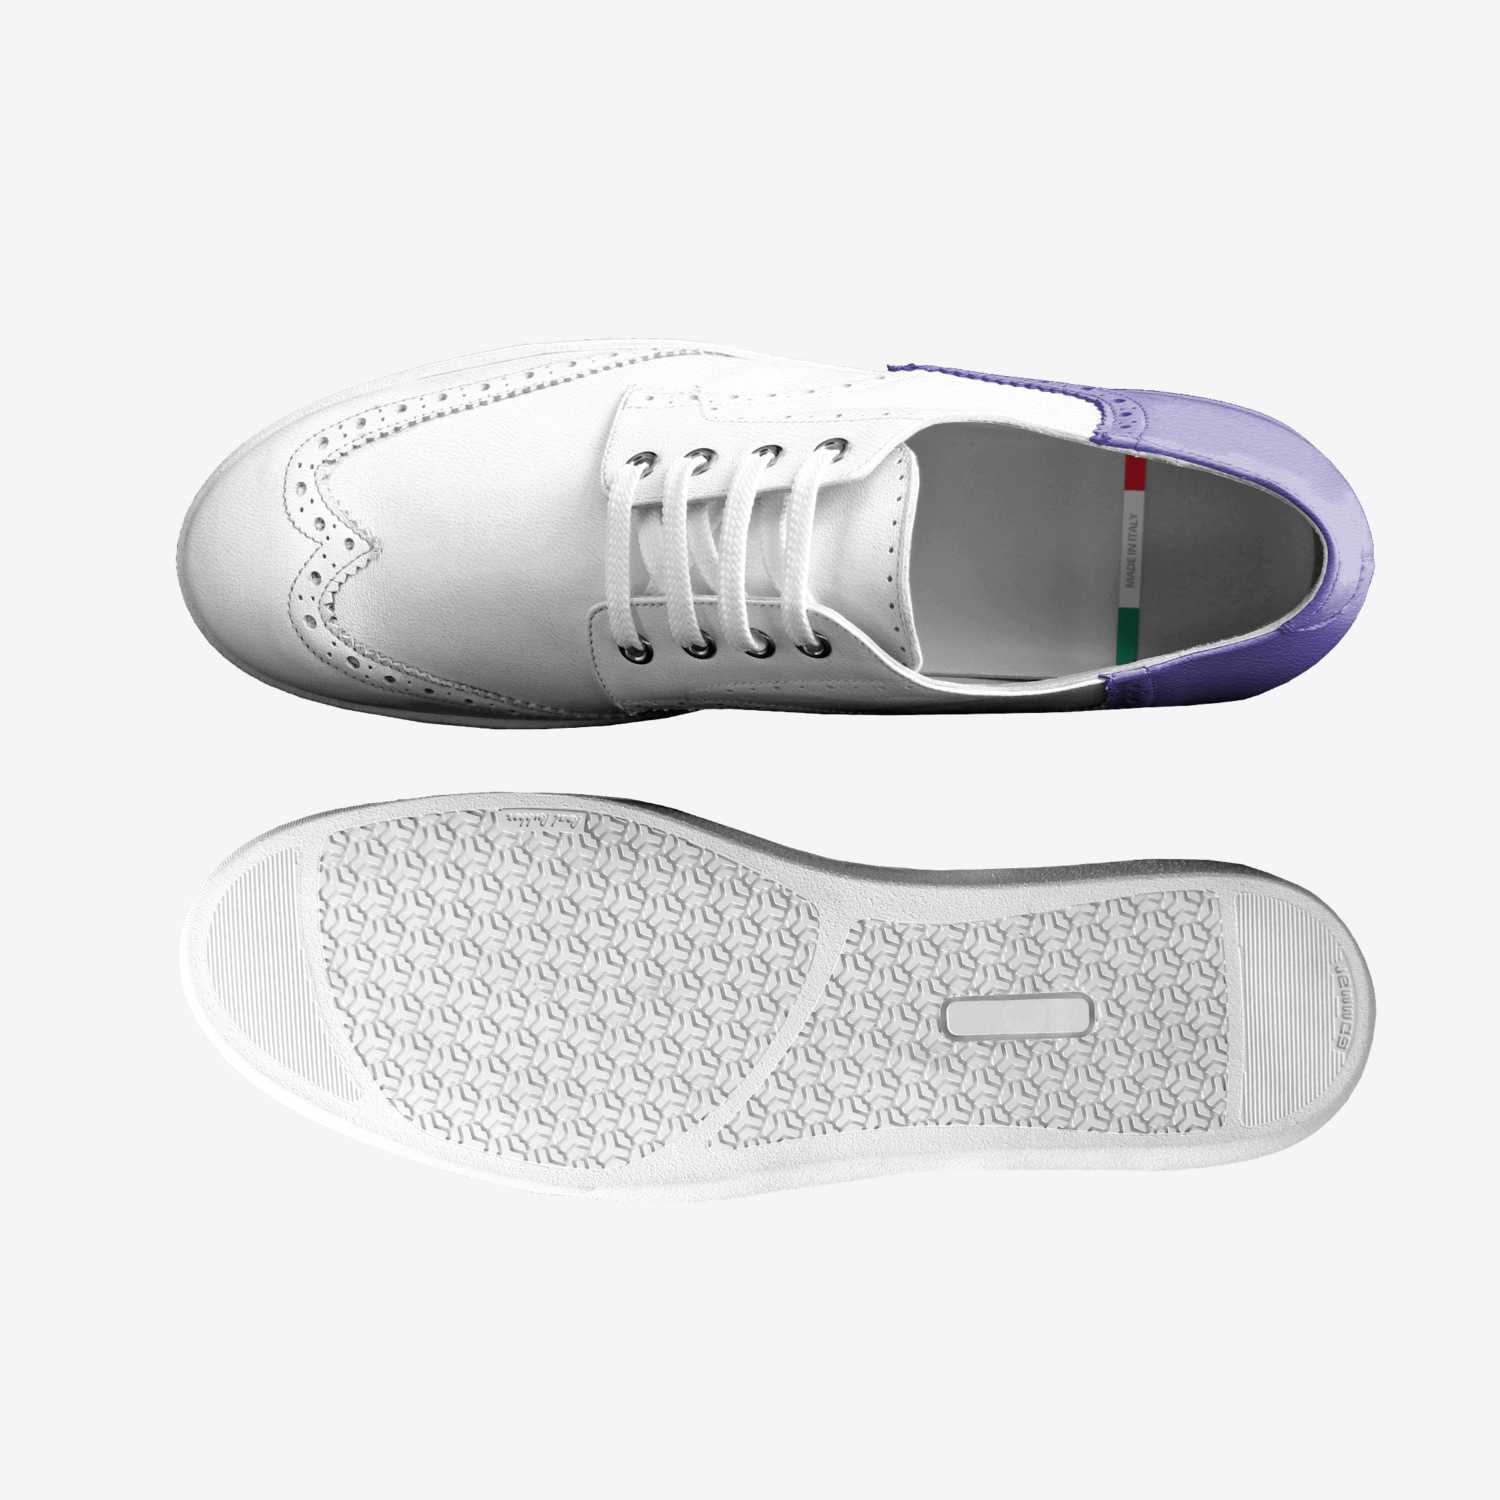 dssdsds | A Custom Shoe concept by Luca Sas